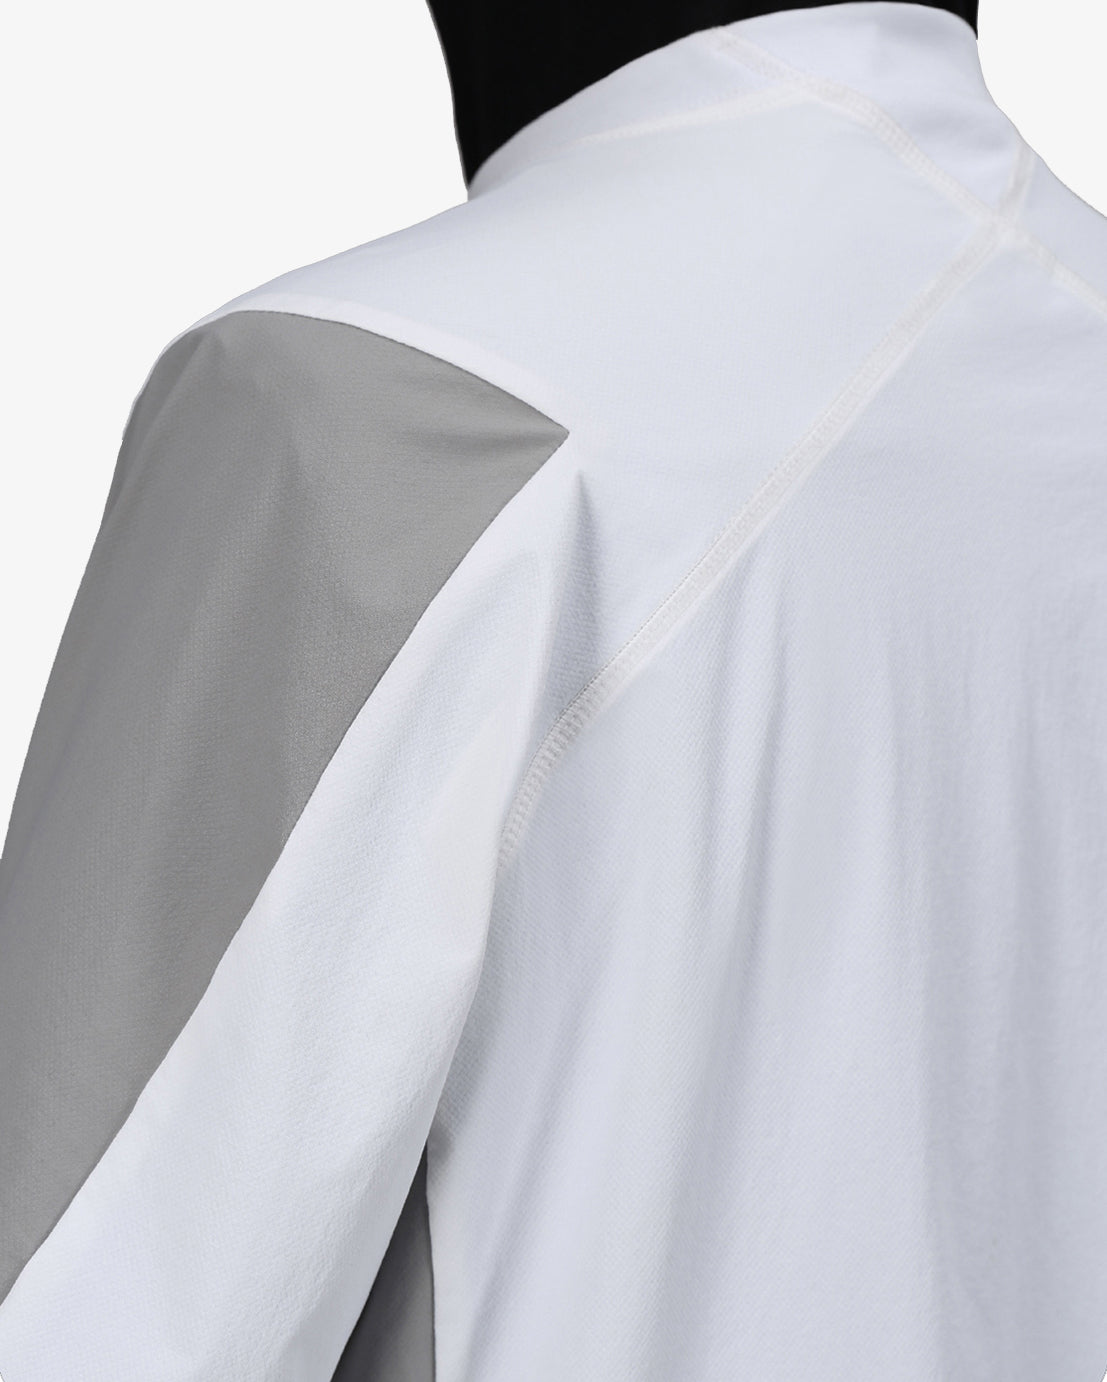 187 Quick Drying Long Sleeve Shirt White